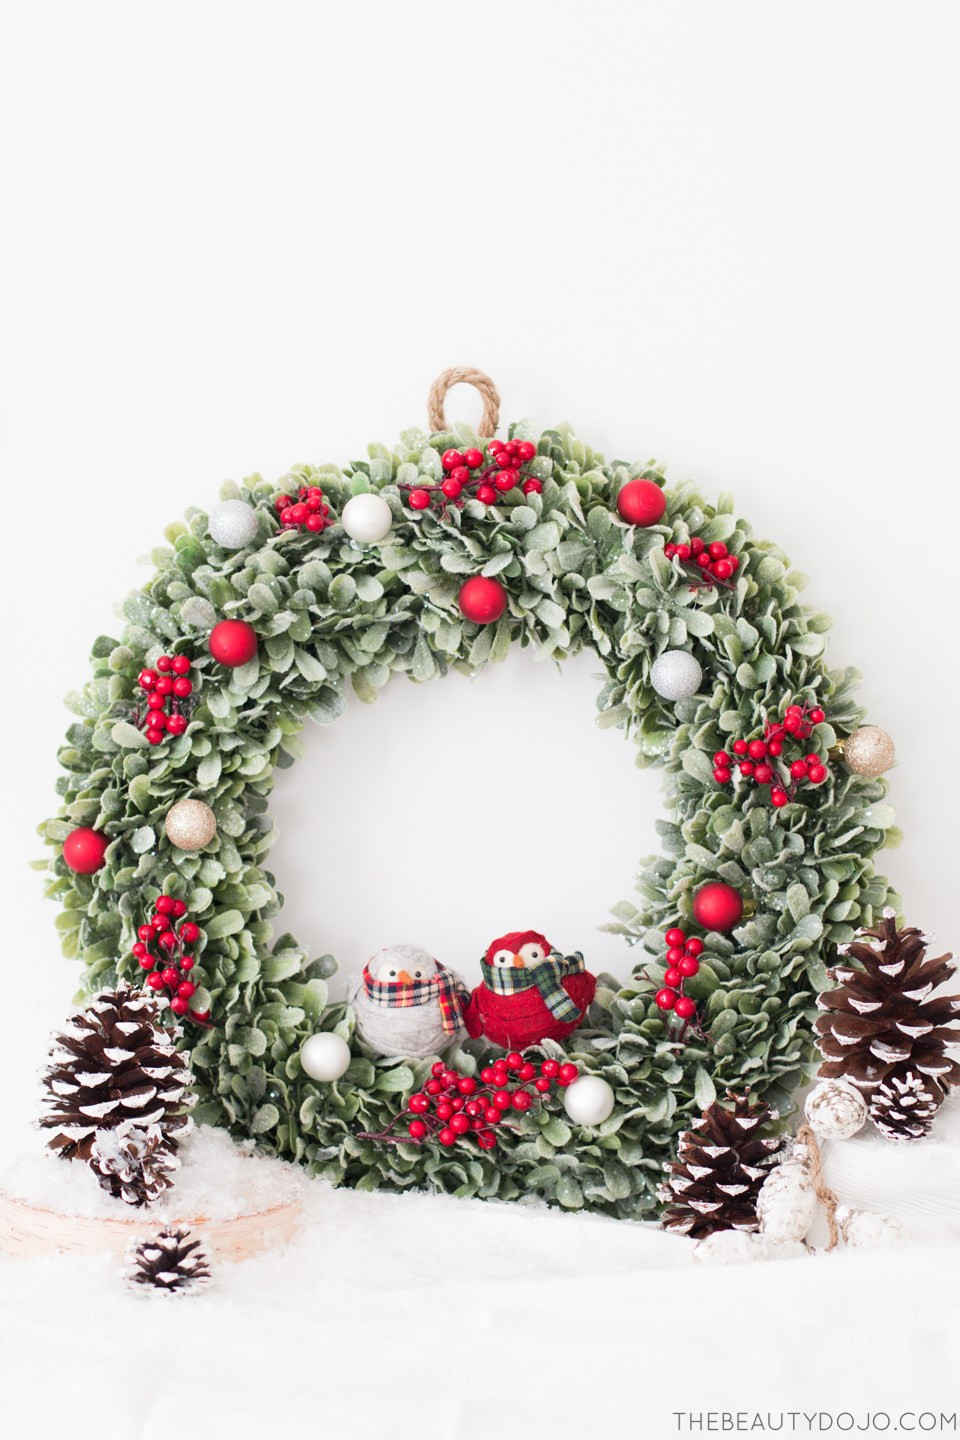 Best ideas about DIY Wreath Christmas
. Save or Pin DIY Christmas Wreath The Beautydojo Now.